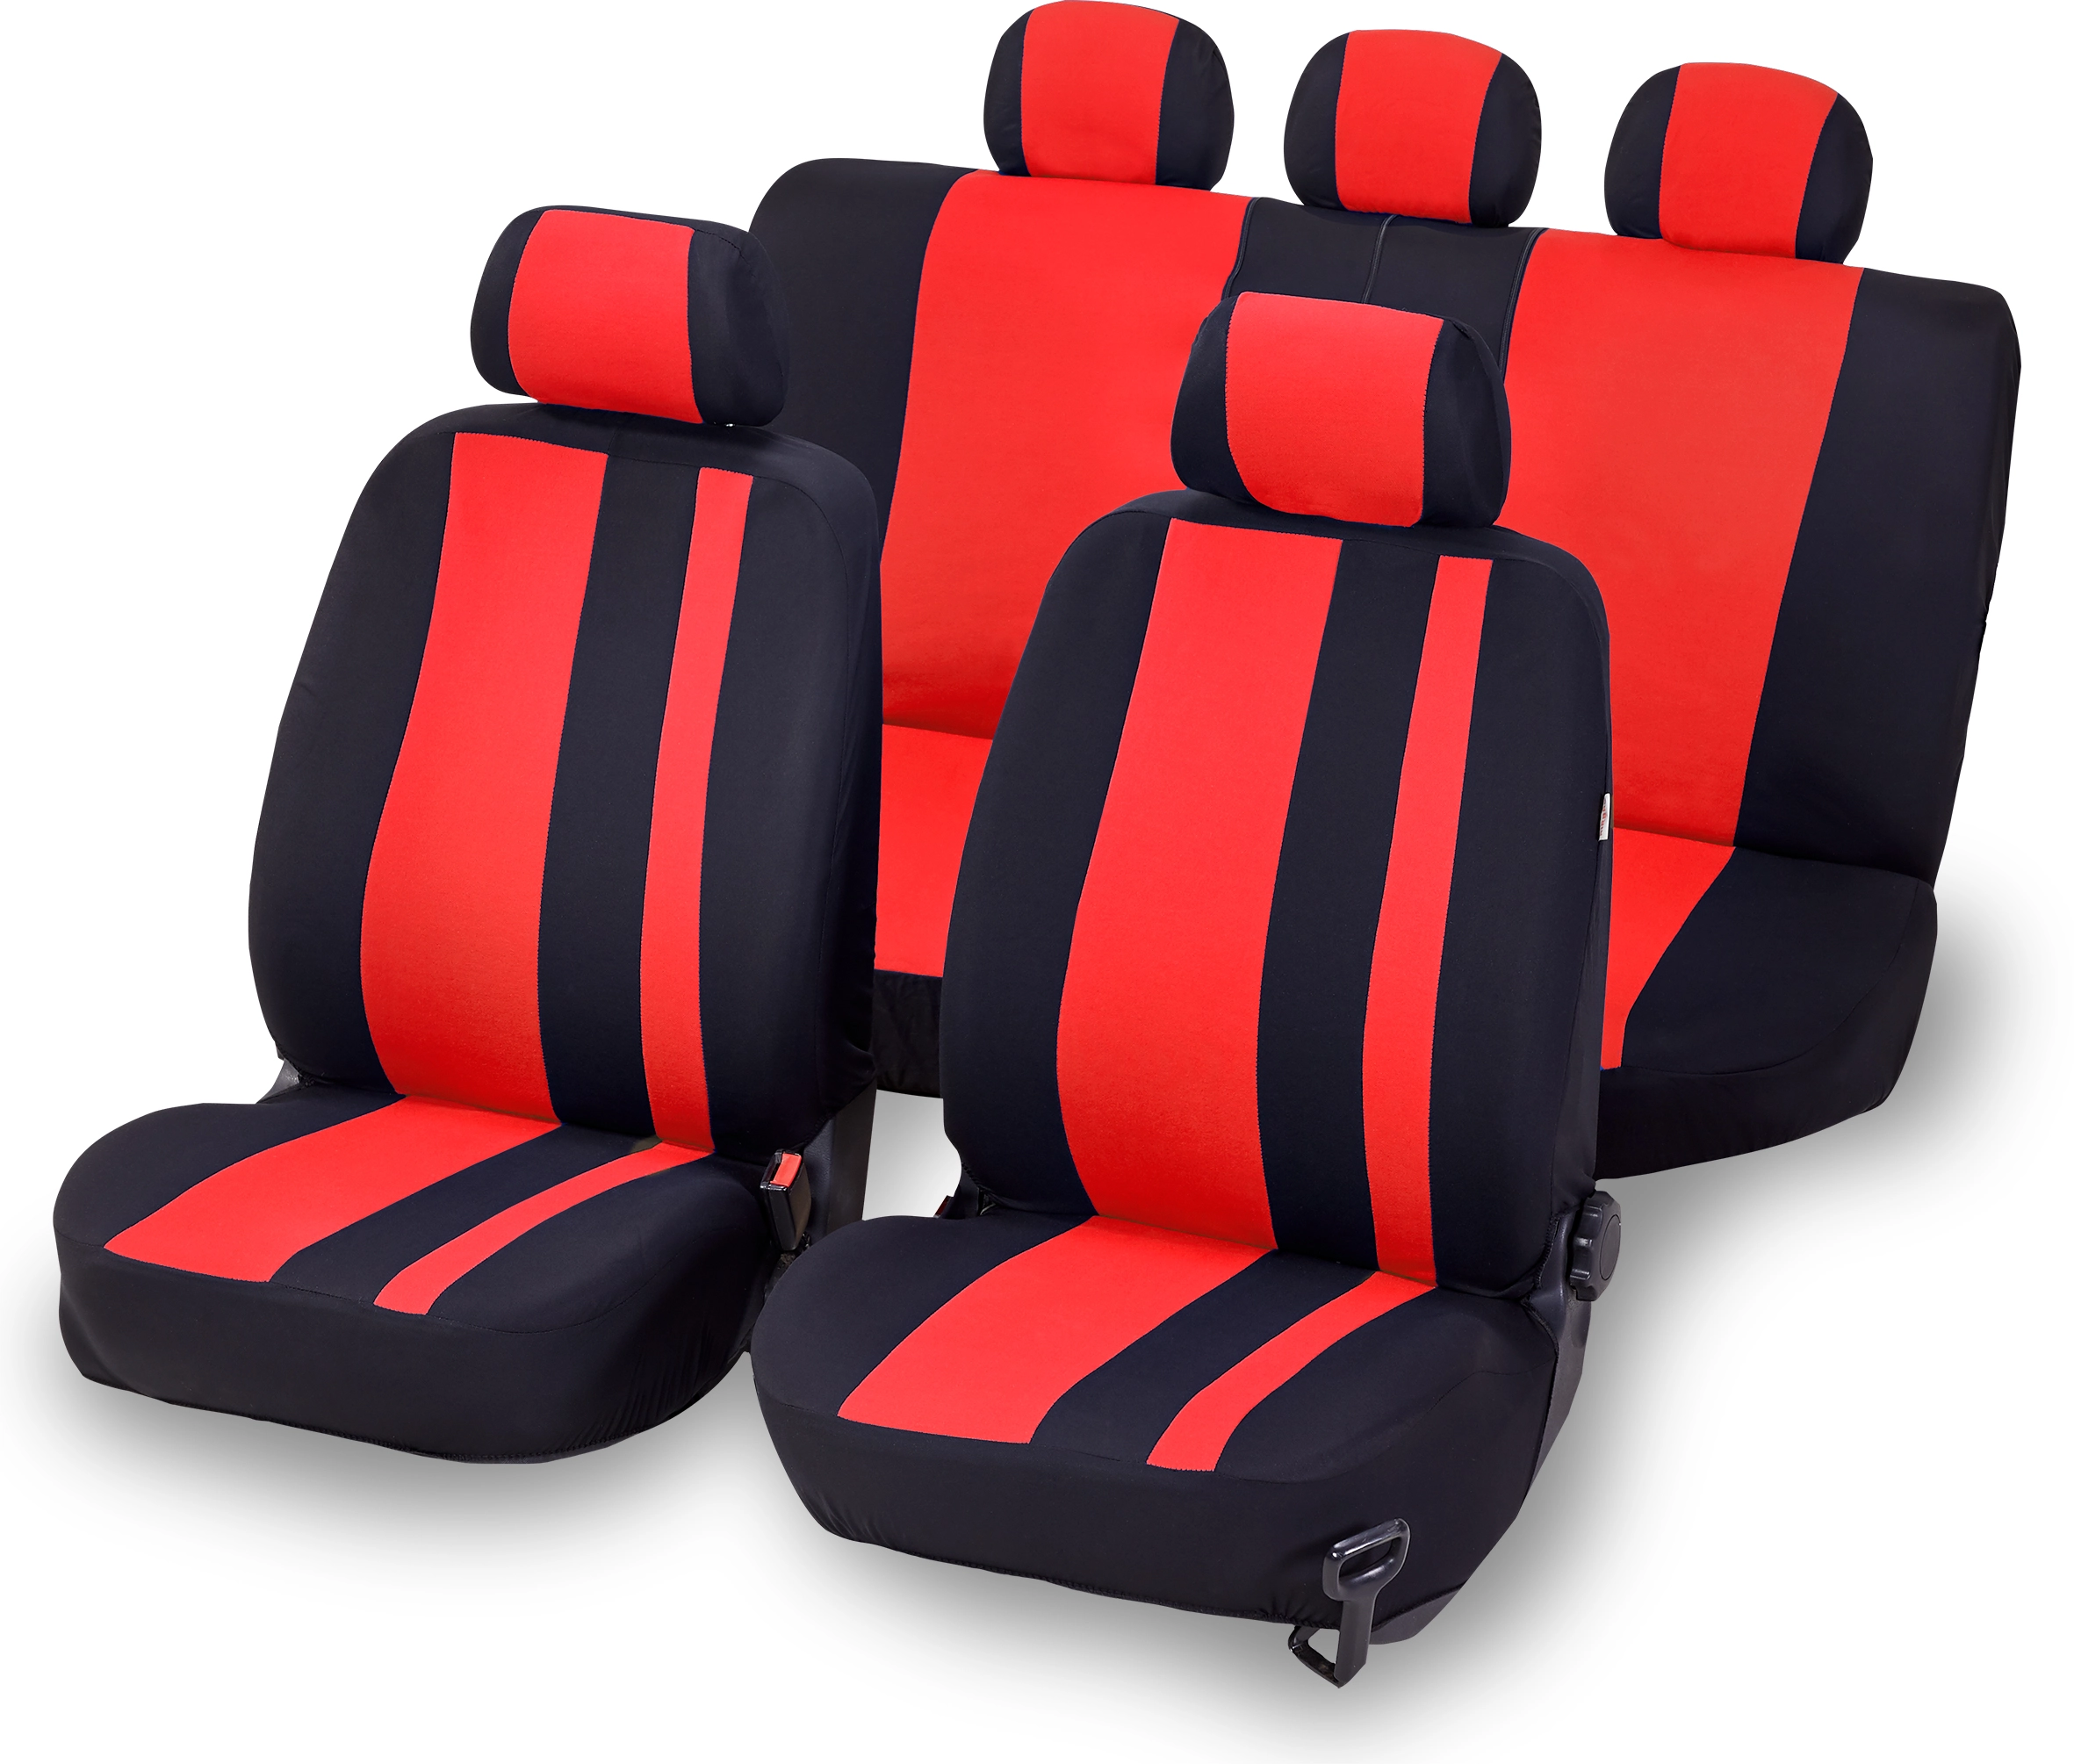 Cartrend Sitzbezug-Set Newline Rot/Schwarz 14-teilig kaufen bei OBI